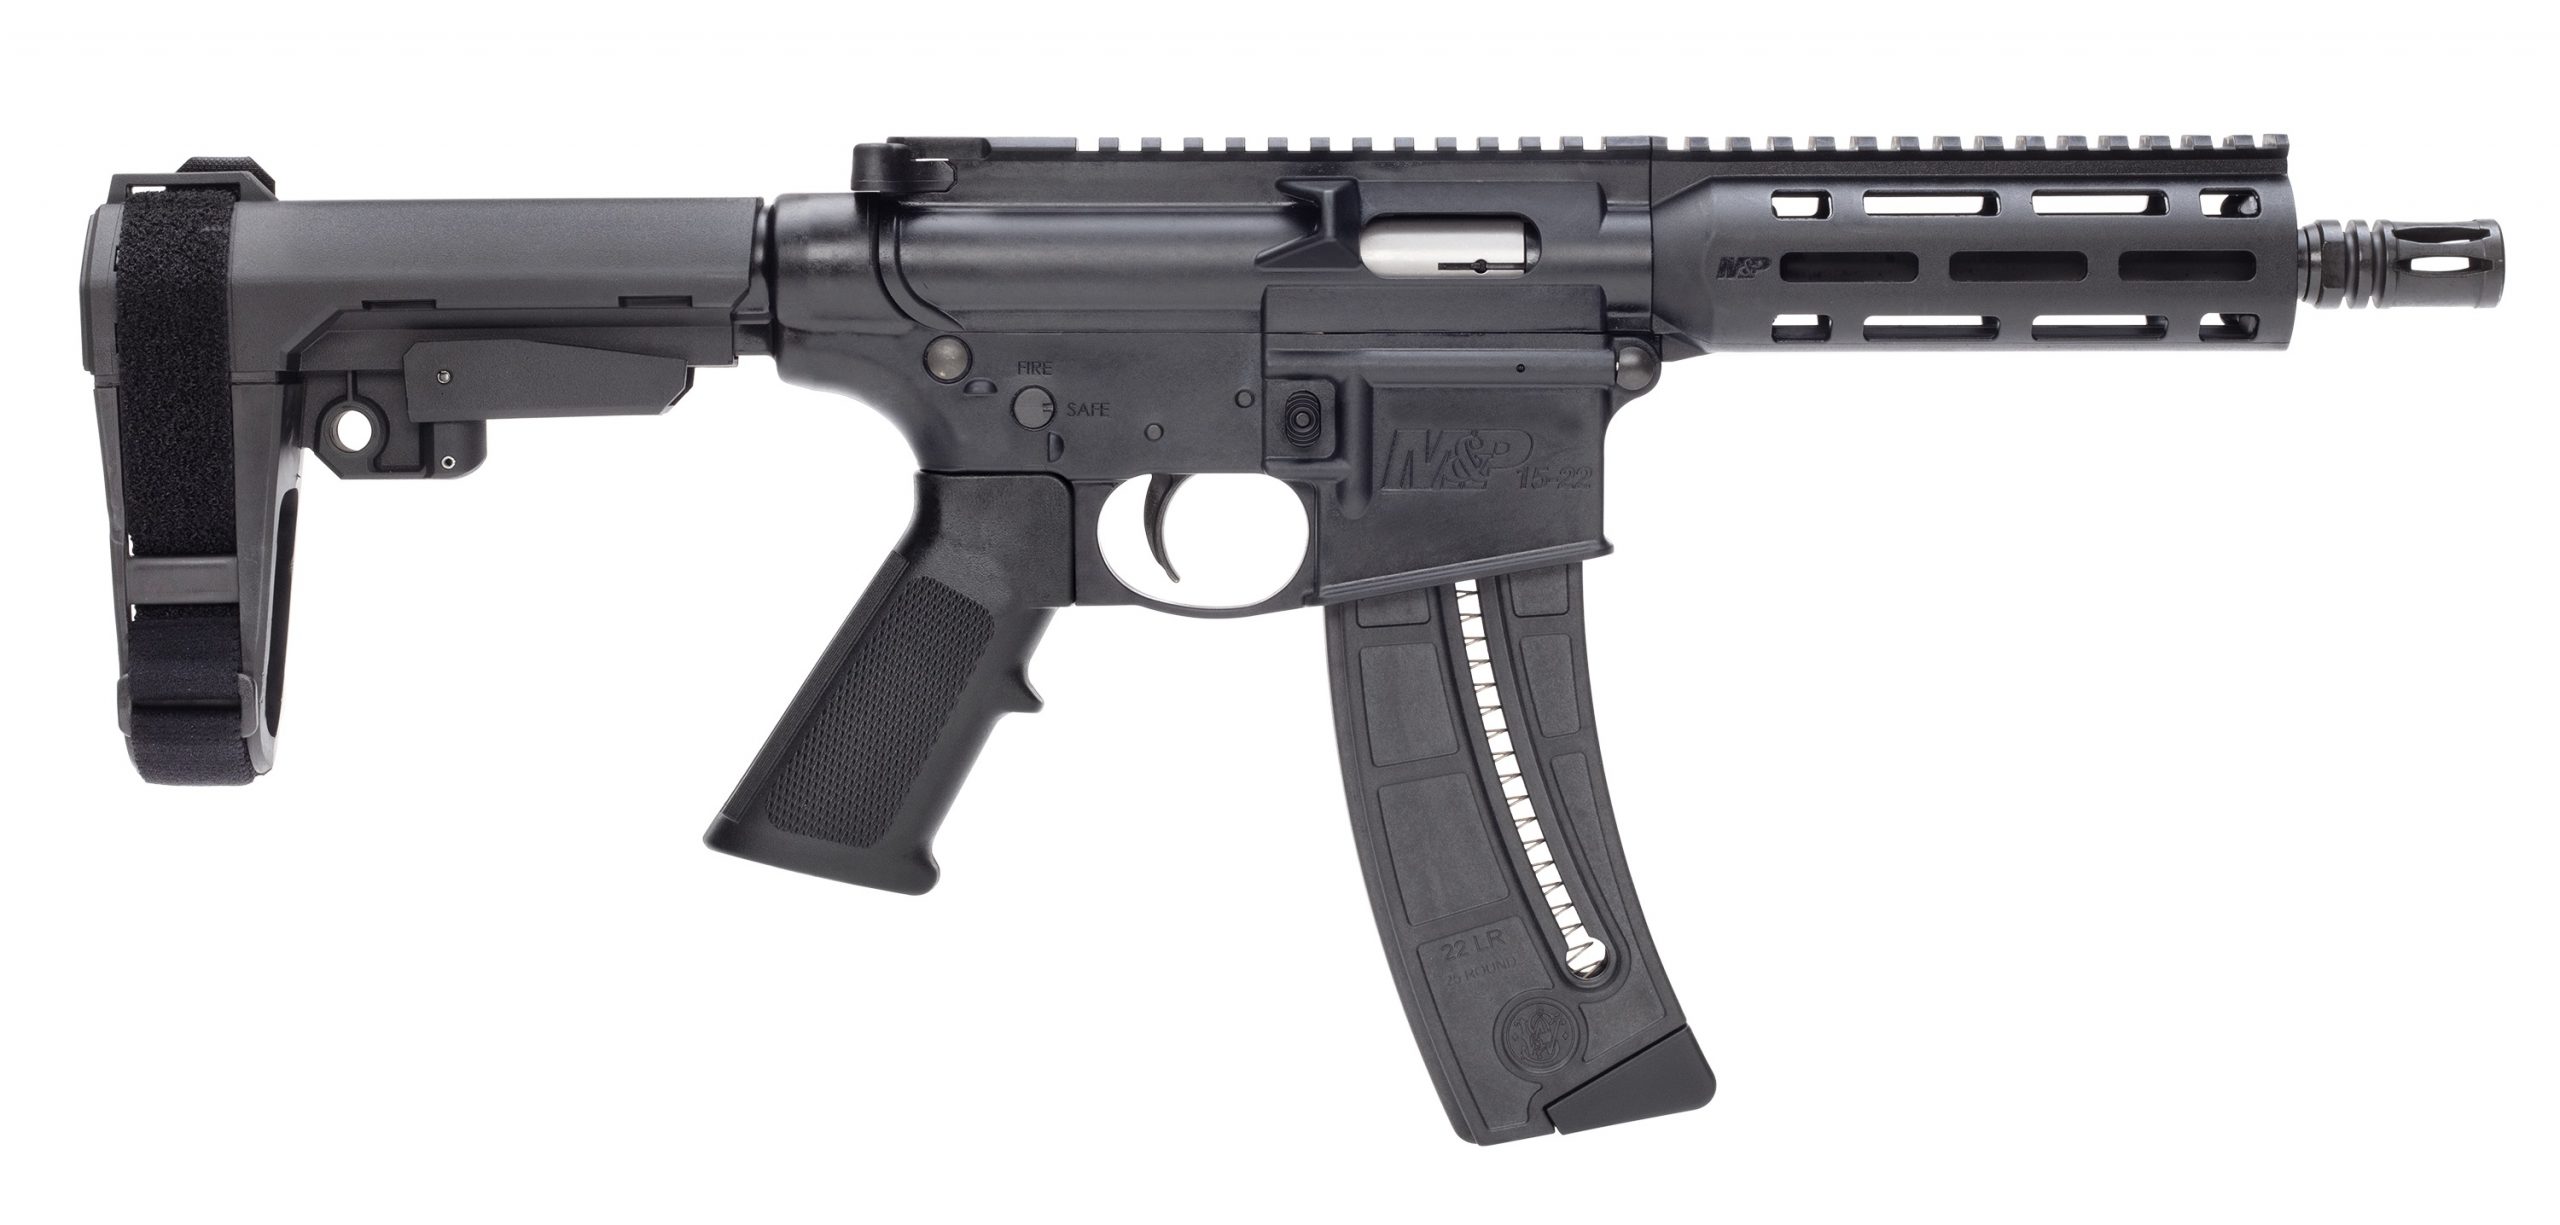 Smith And Wesson Mandp 15 22lr Ar Pistol A Comprehensive Review News